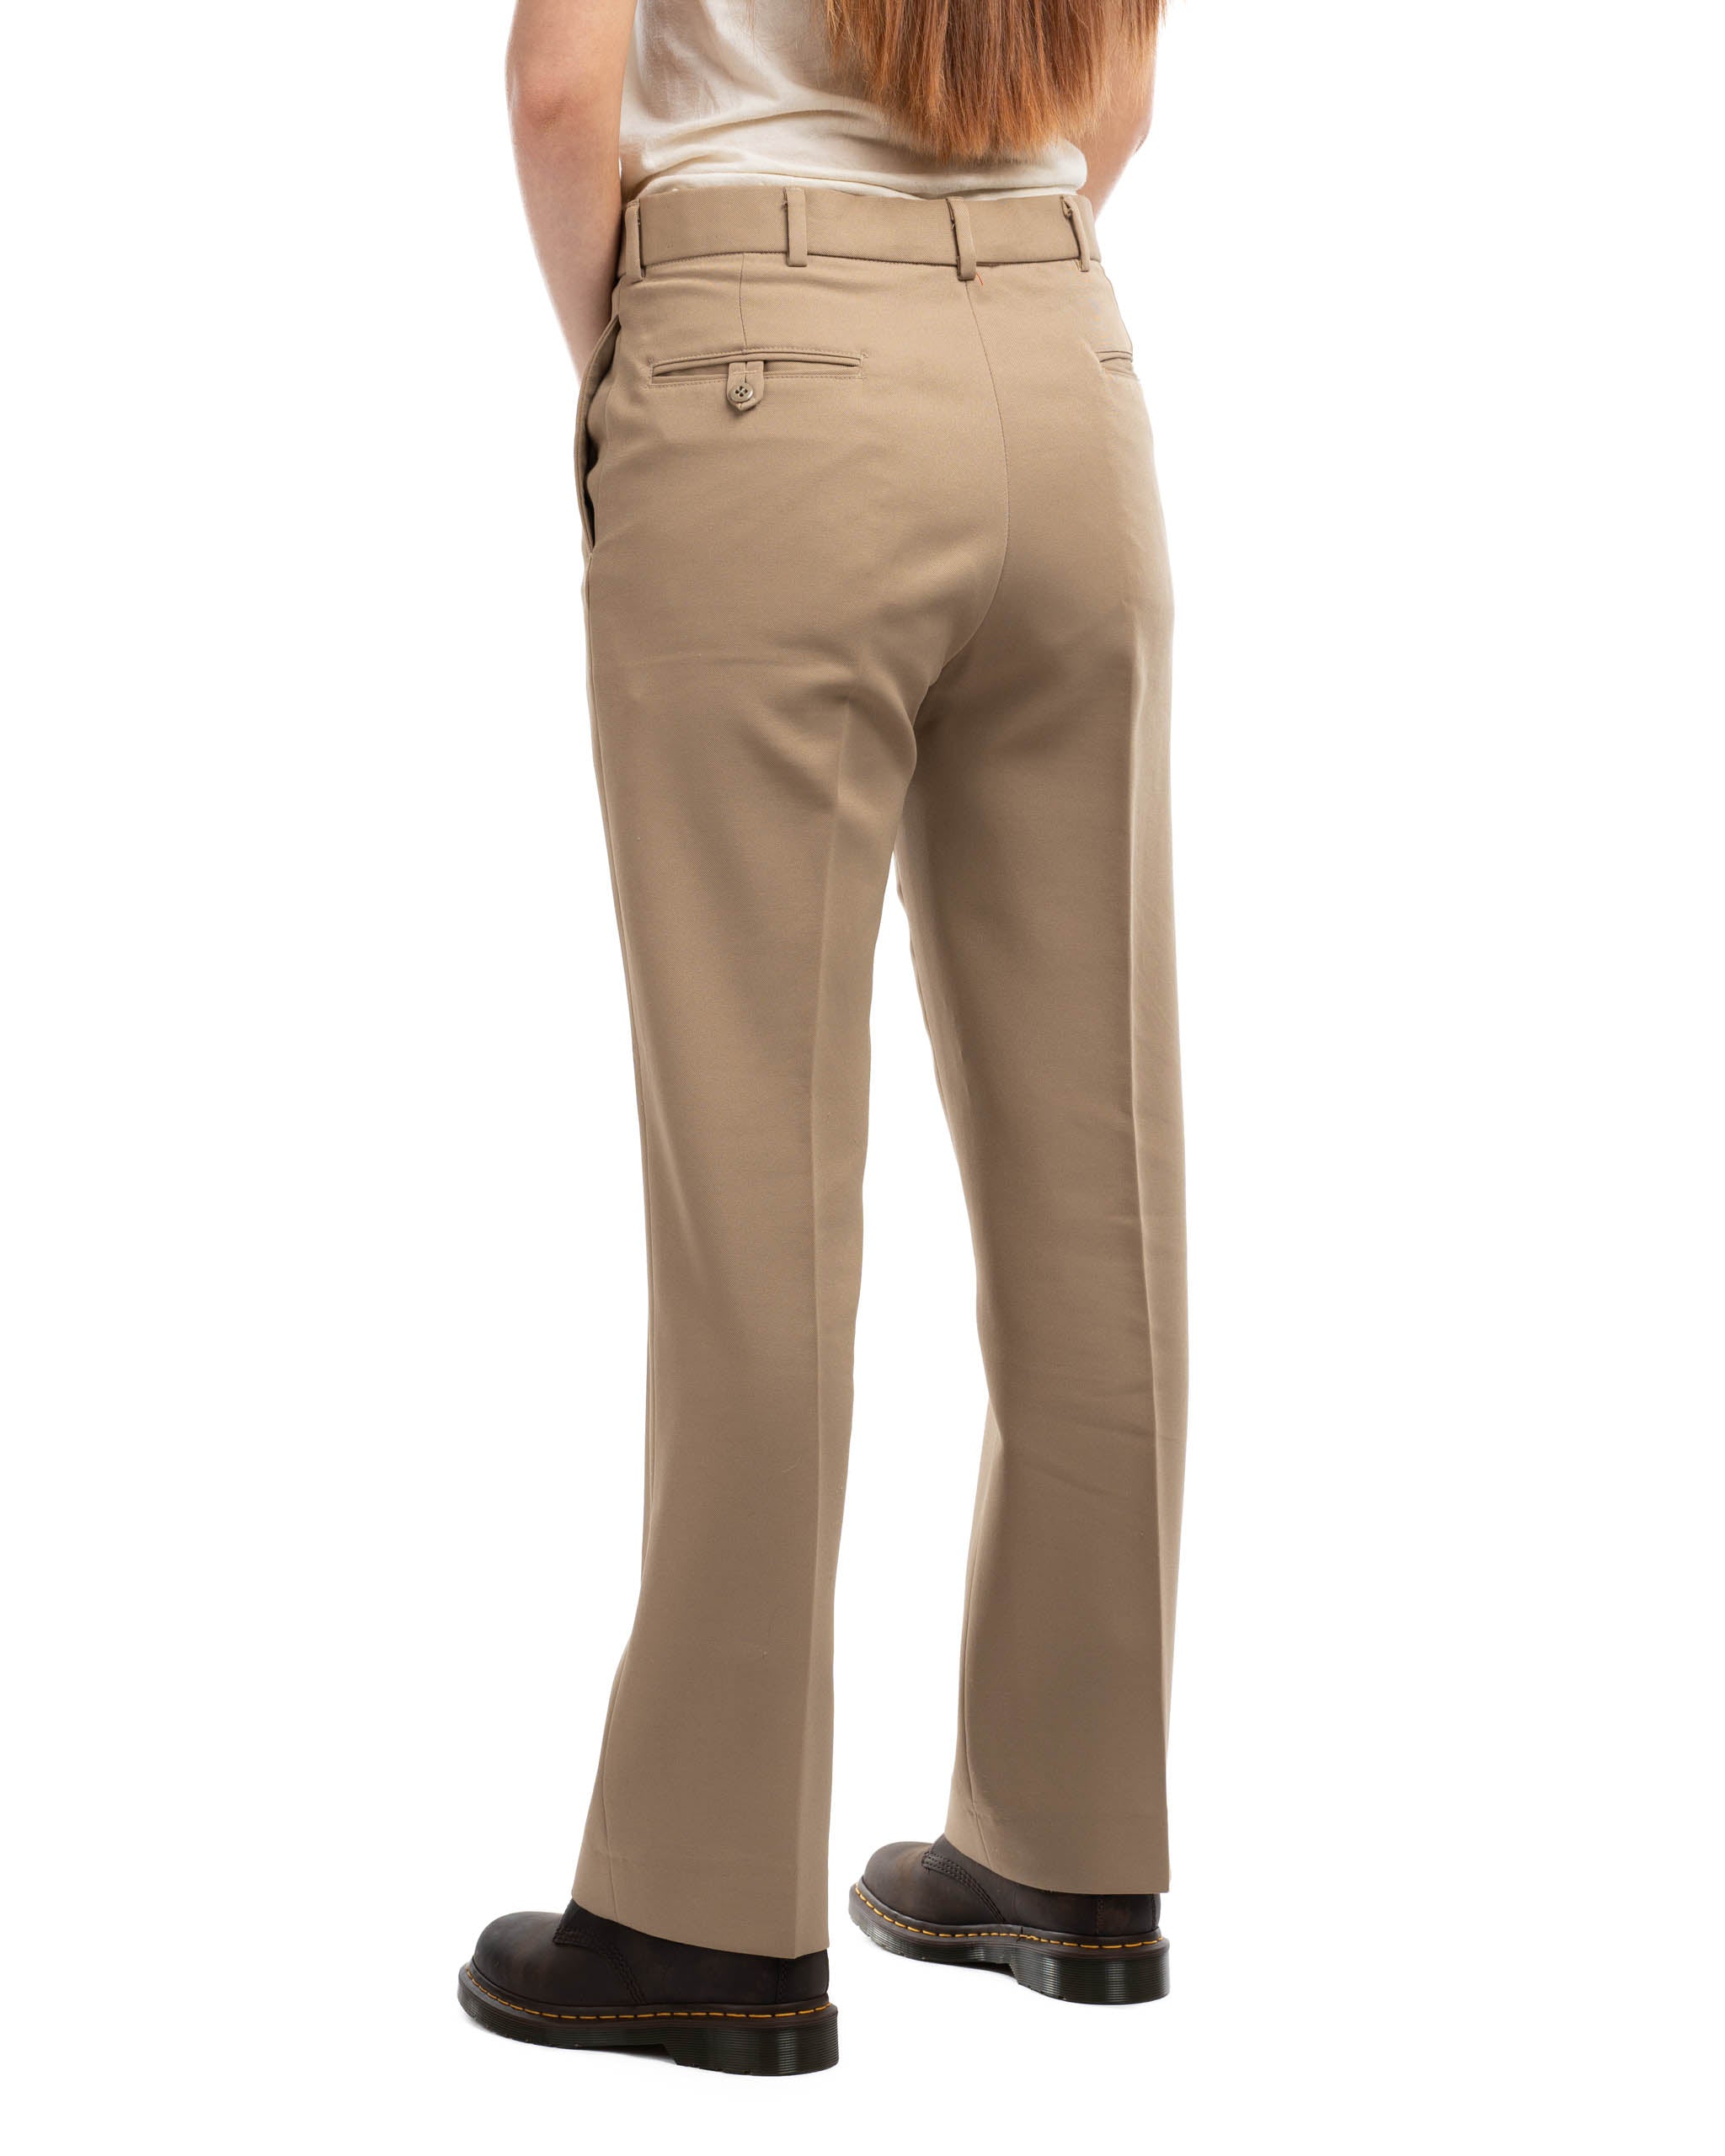 Ladies FR Uniform Pants made with 5oz. TecaSafe One® Inherent | Denim –  www.lapco.com